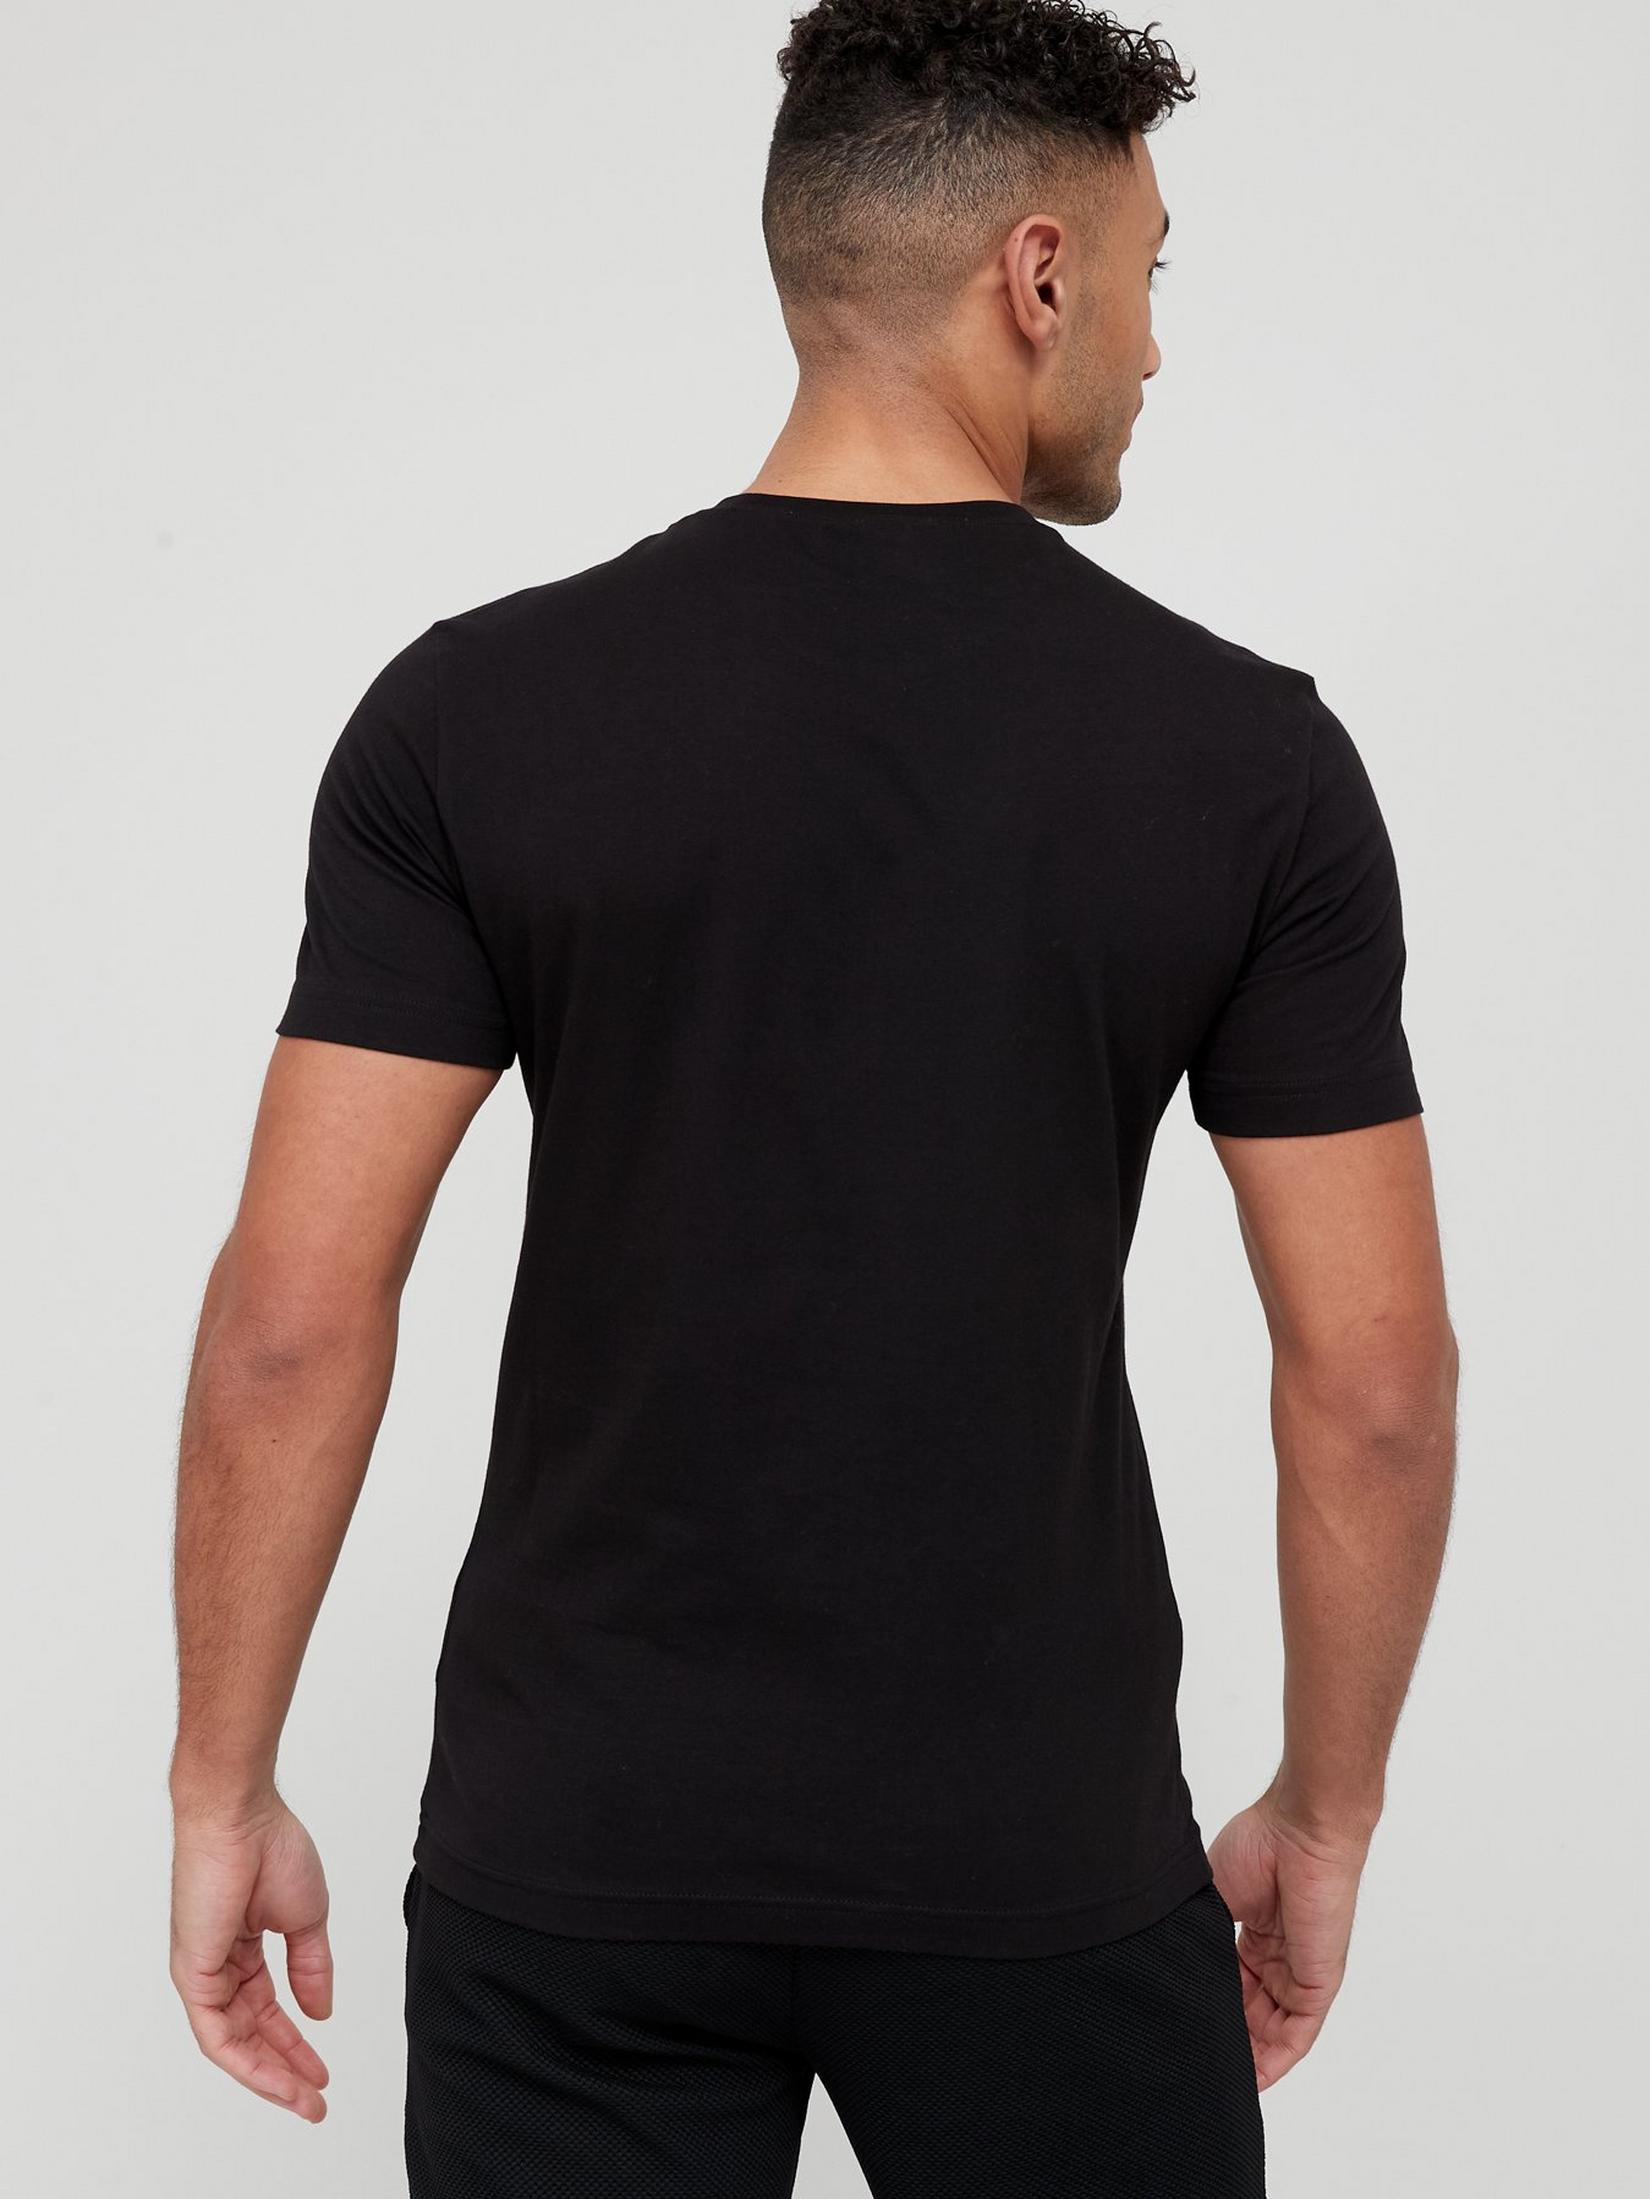 EA7 Emporio Armani, Mens, Black, T-shirts, XL – Sale Lab UK